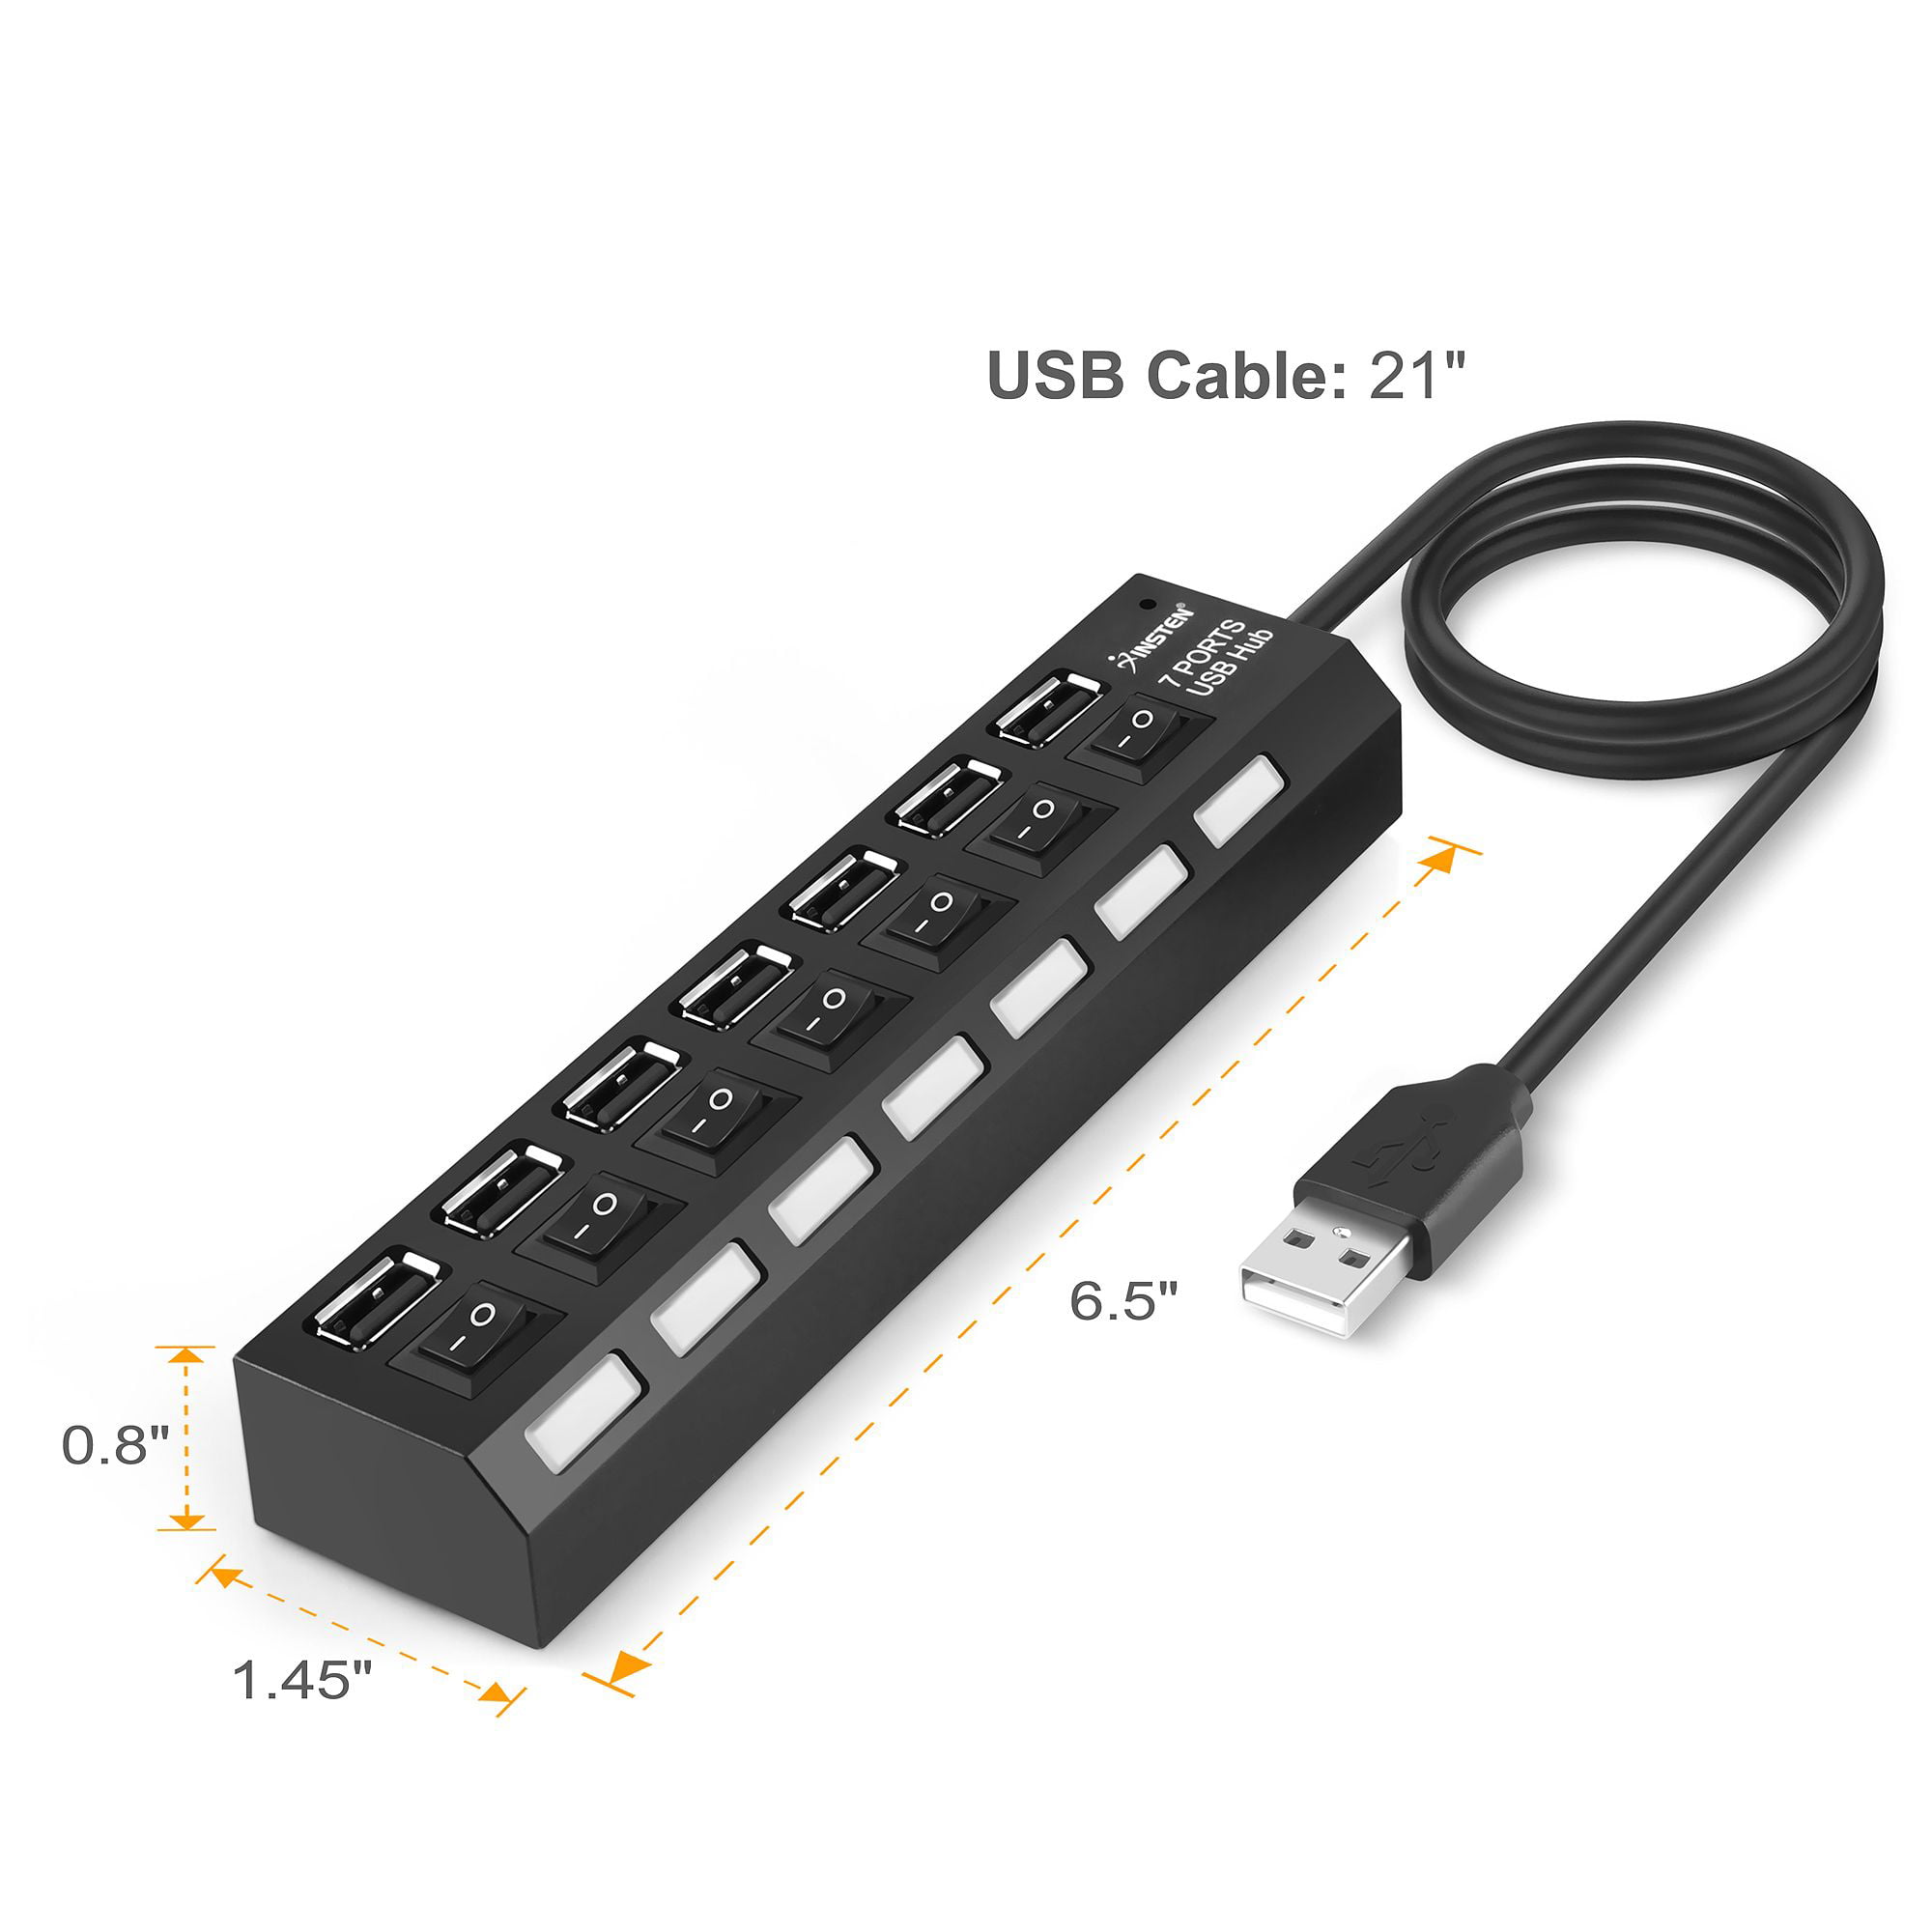 7-Port USB Hub USB 2.0 Hub Data Transfer with Individual Switches Indicator Lights for PC Laptop Black 